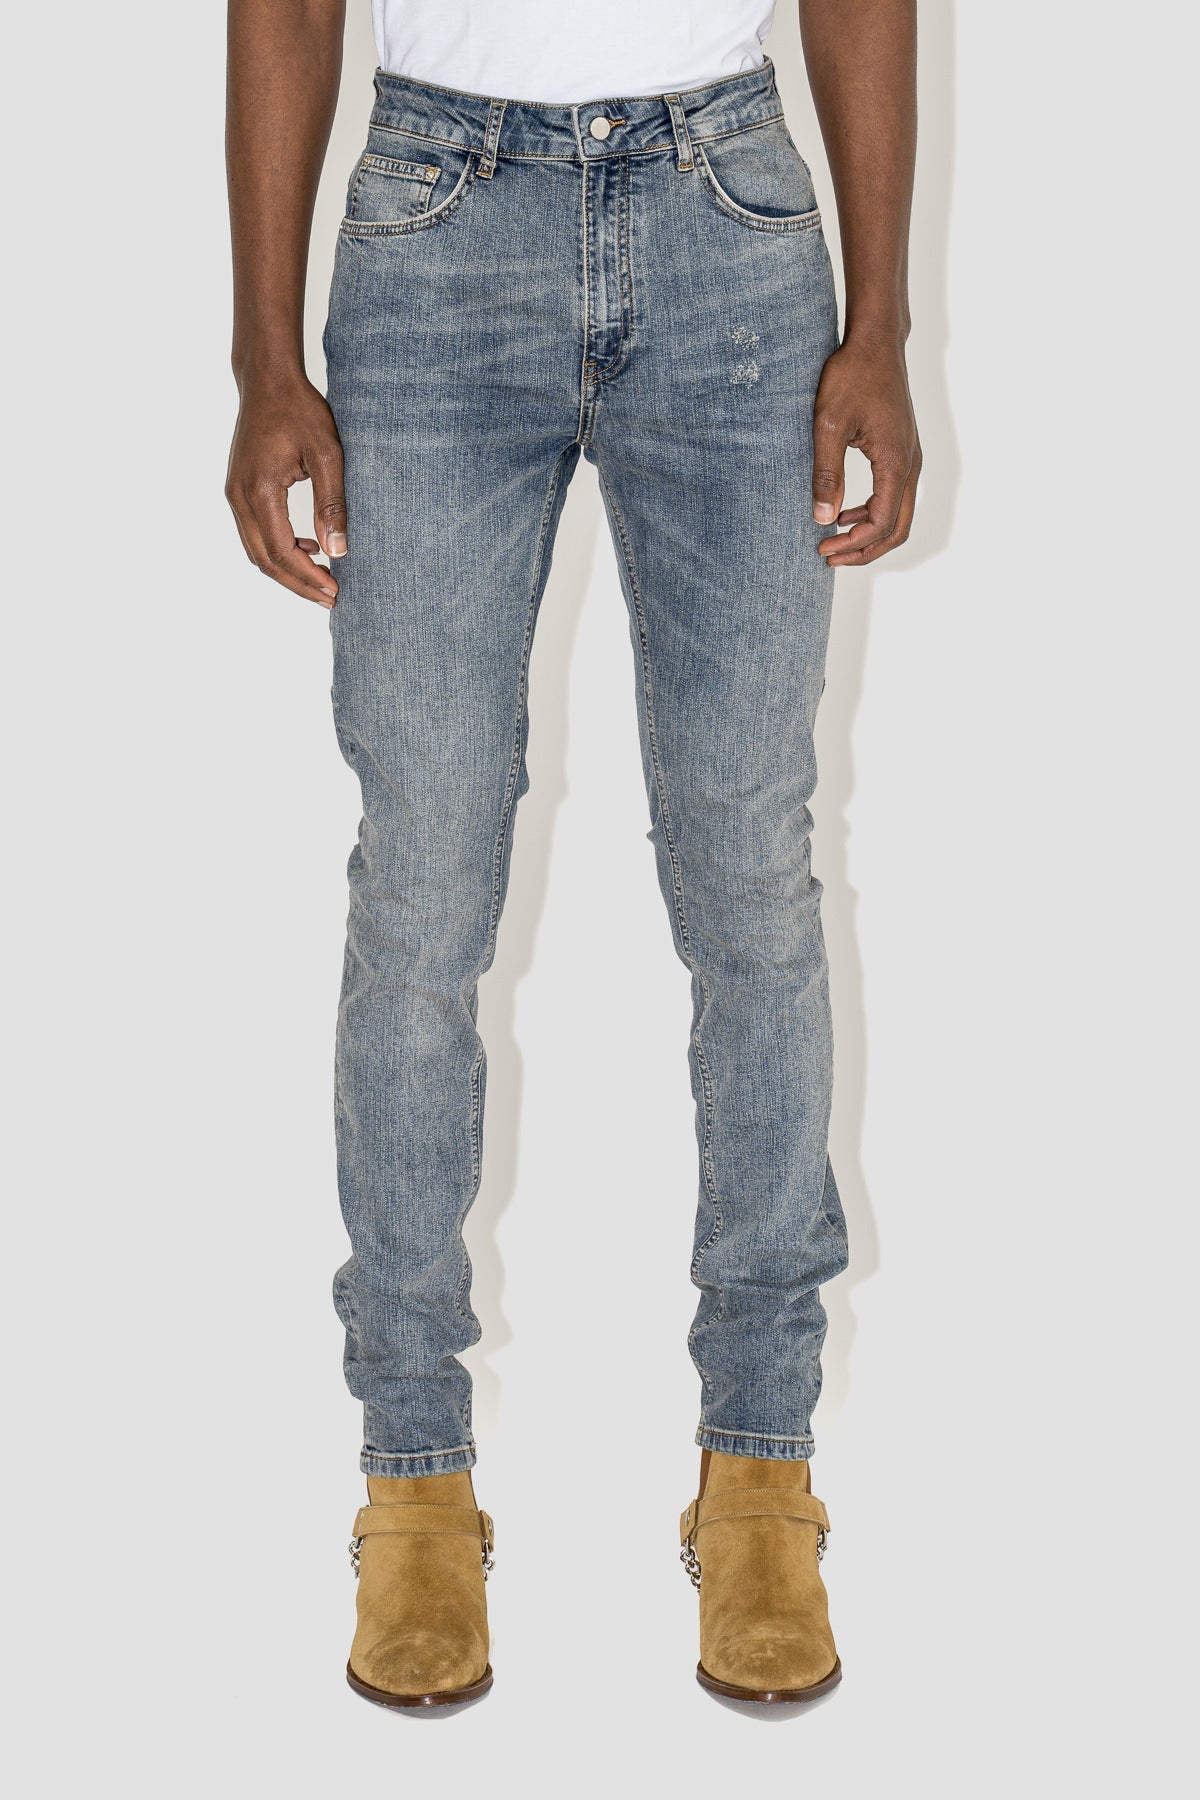 Essential Skinny Jeans in Light Indigo Denim